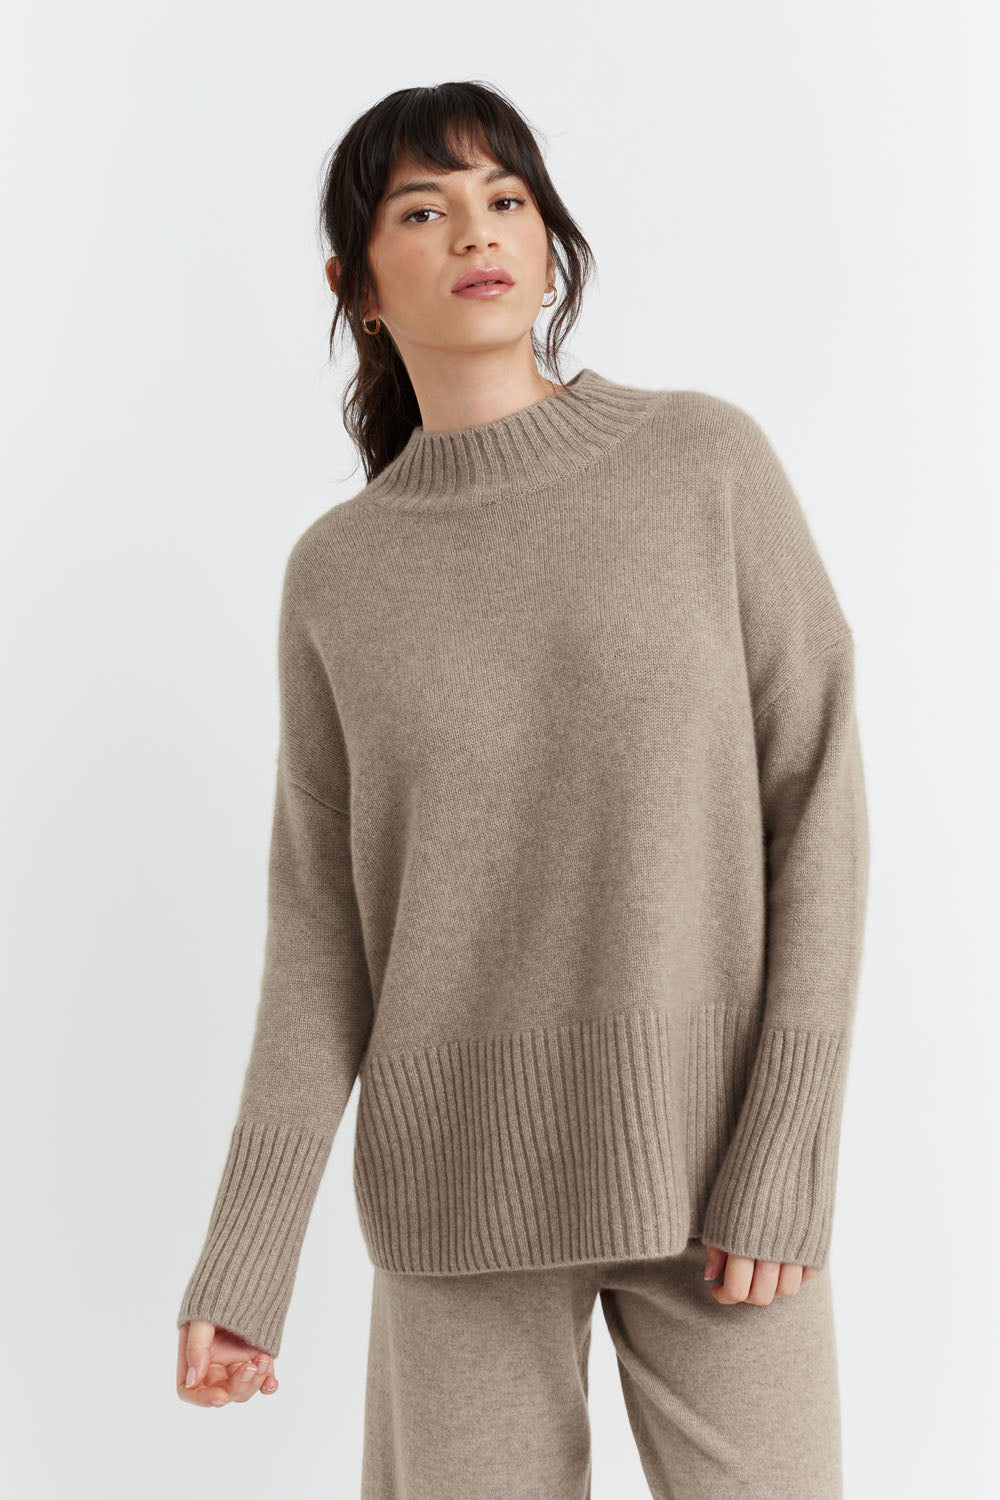 Soft-Truffle Cashmere Comfort Sweater